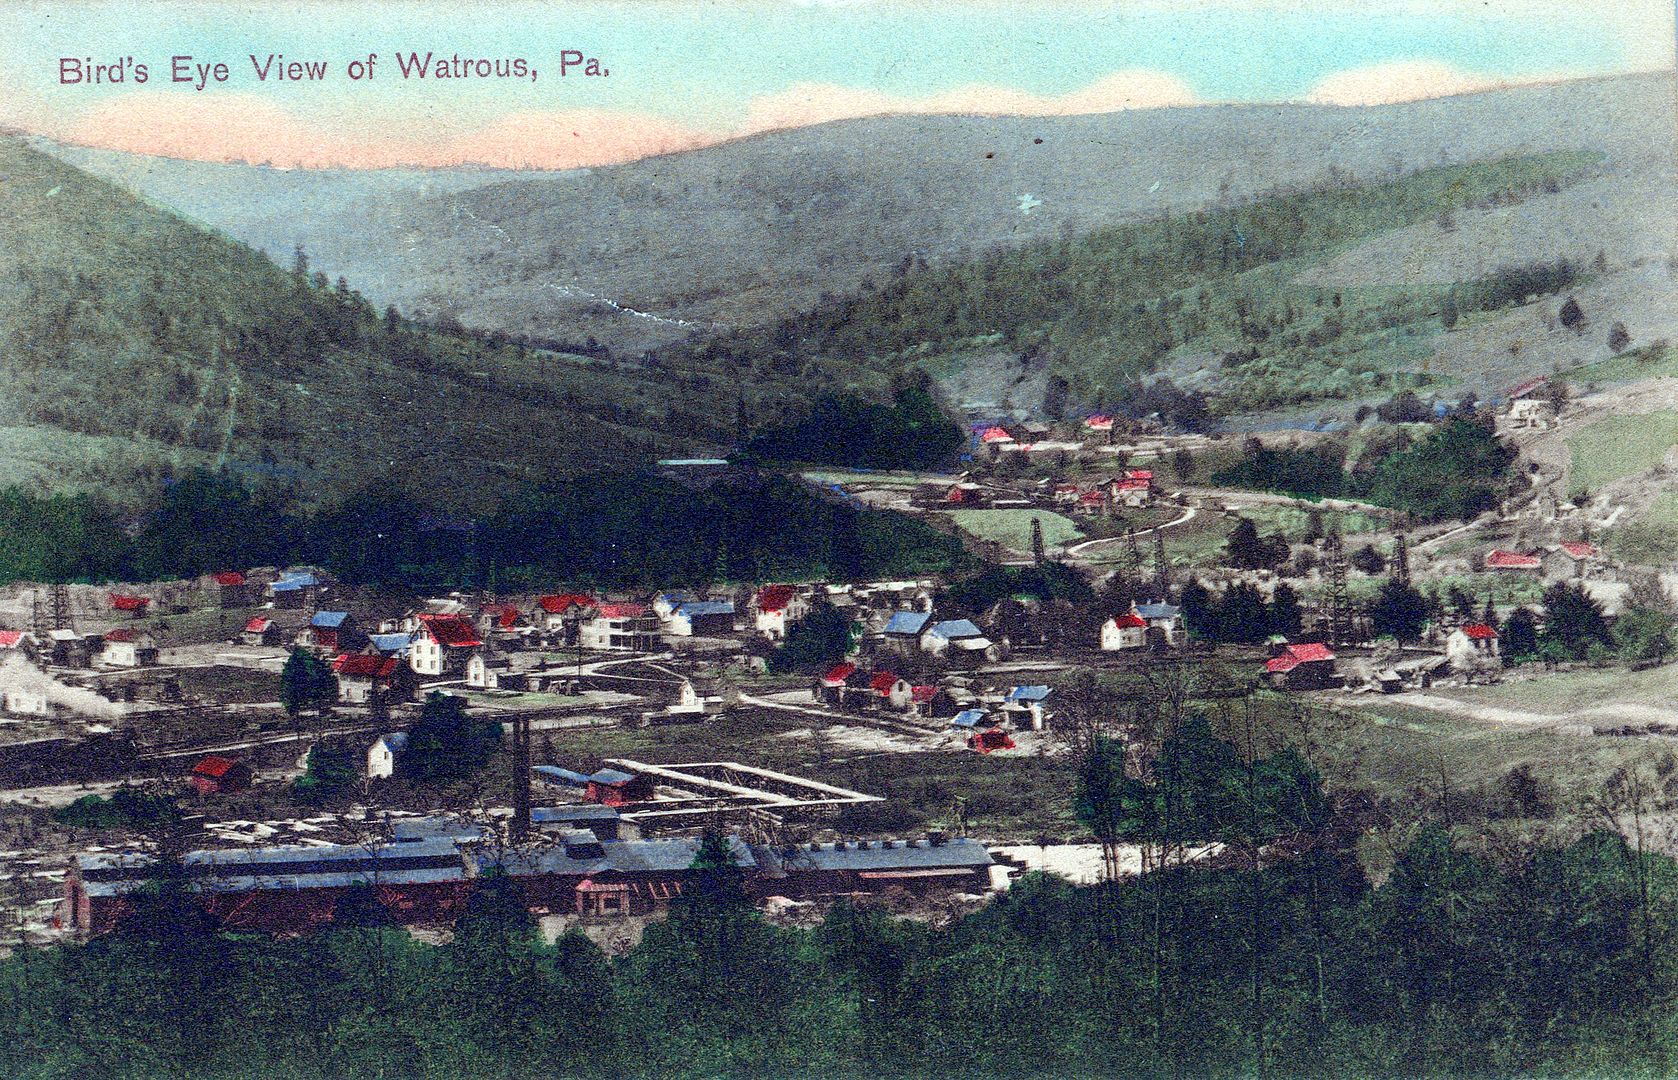 WATROUS PA - Watrous Birdseye View Postcard - Picture 1 of 2